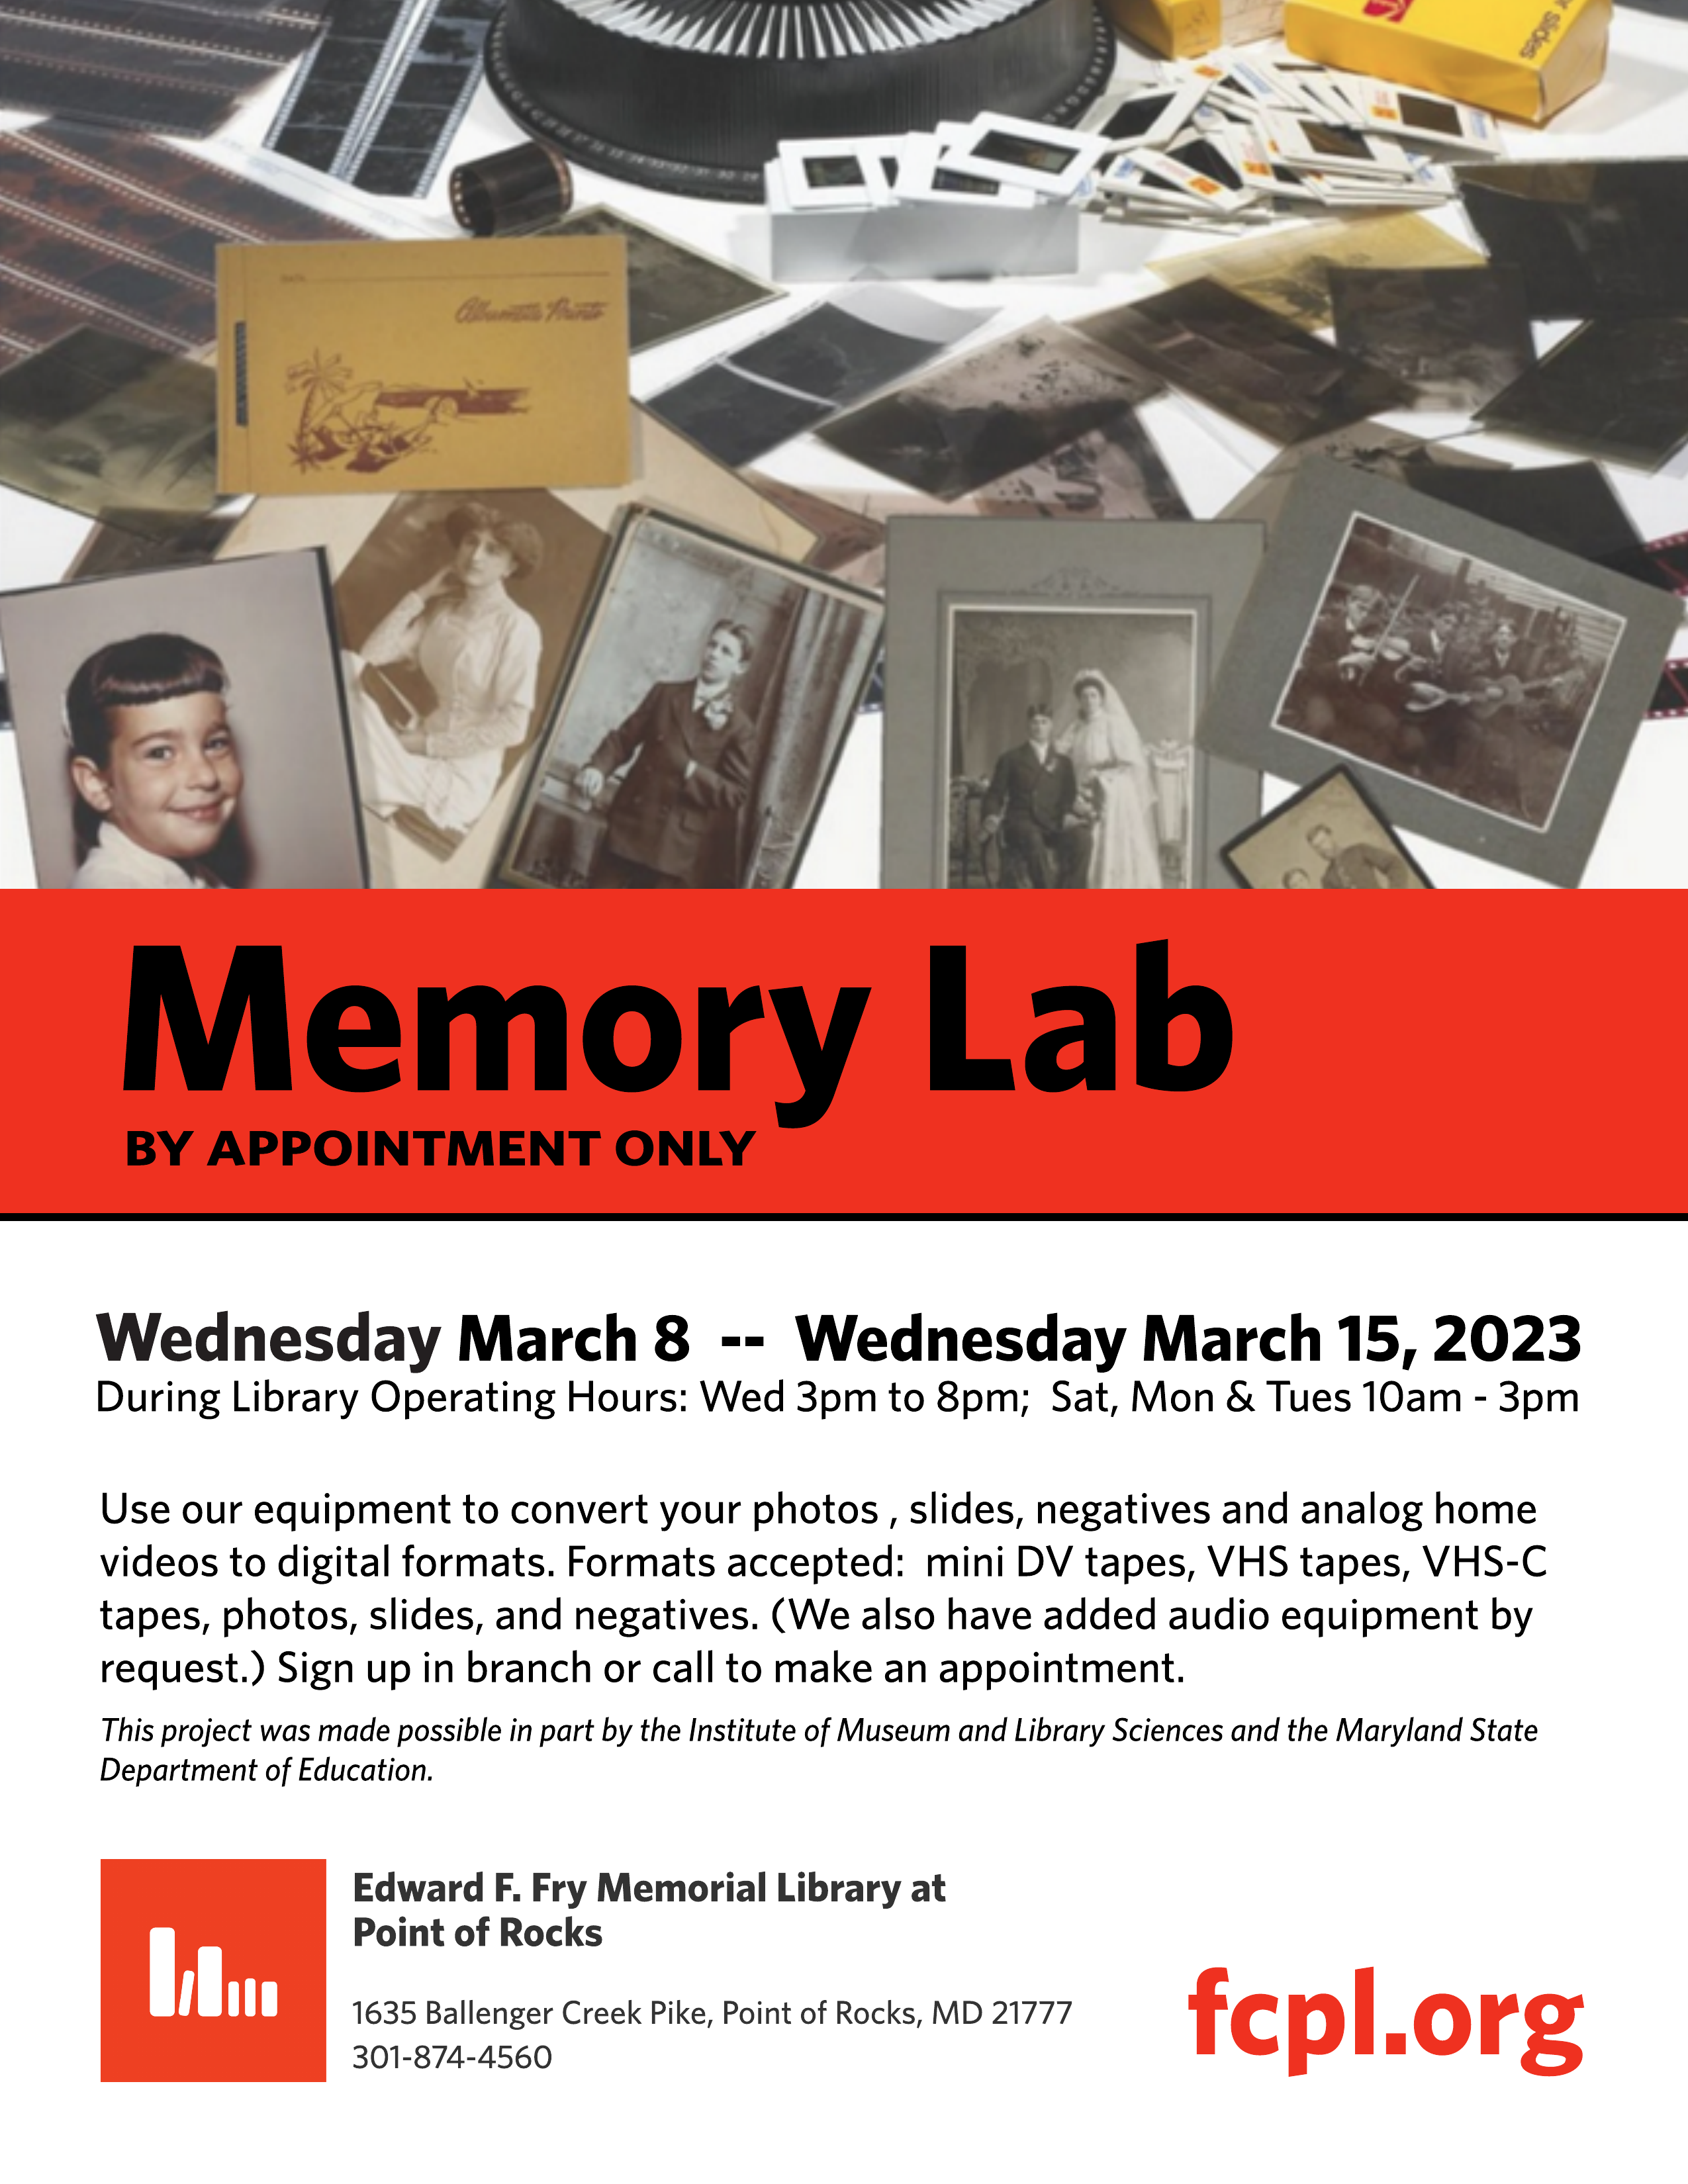 Memory Lab for digital conversion of photos, negatives, slides, tapes. 